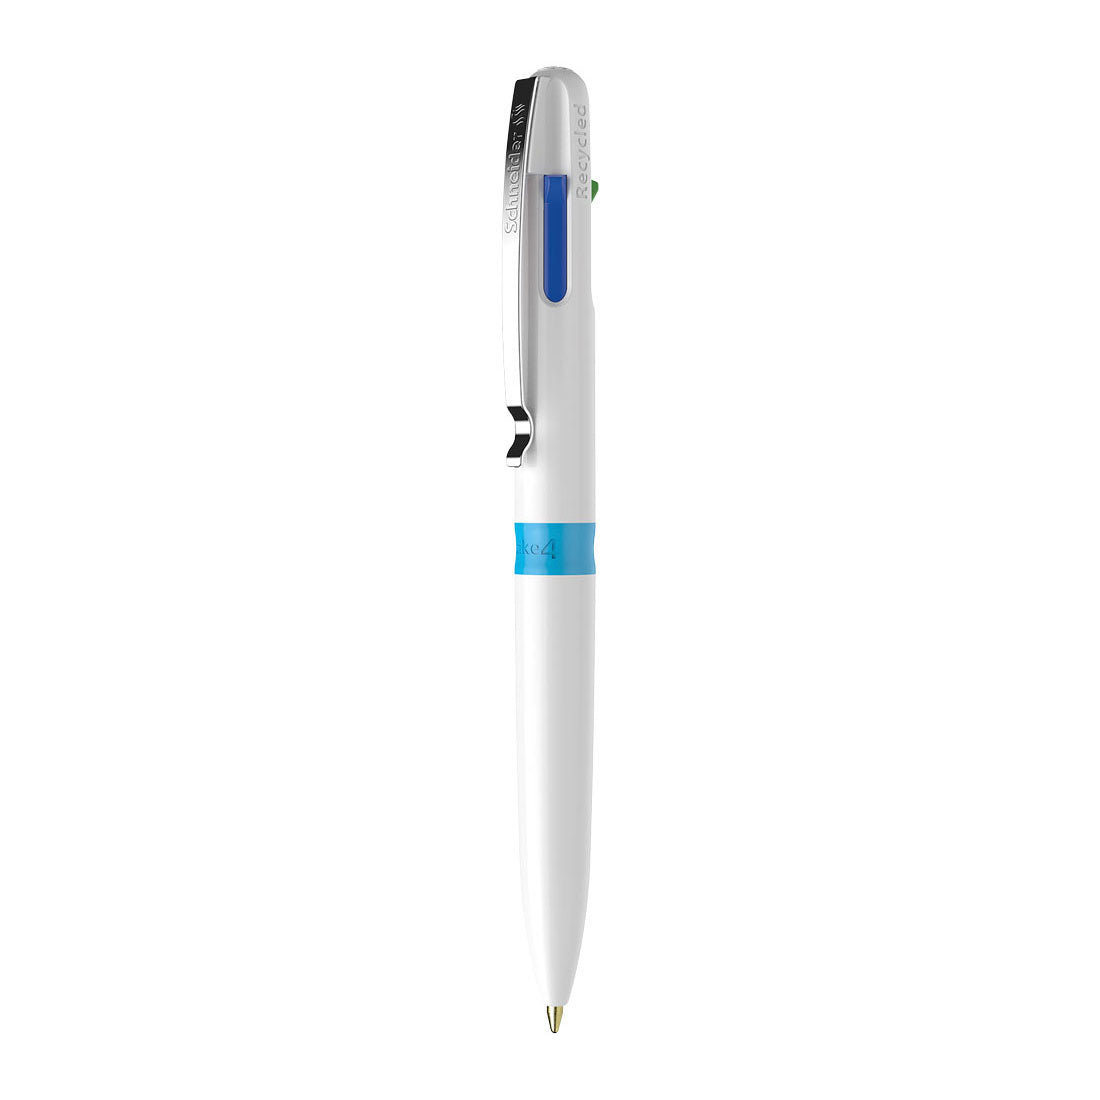 Take 4 Multi 4- Colour Ballpoint Pens M, Box of 10 units - White/Blue